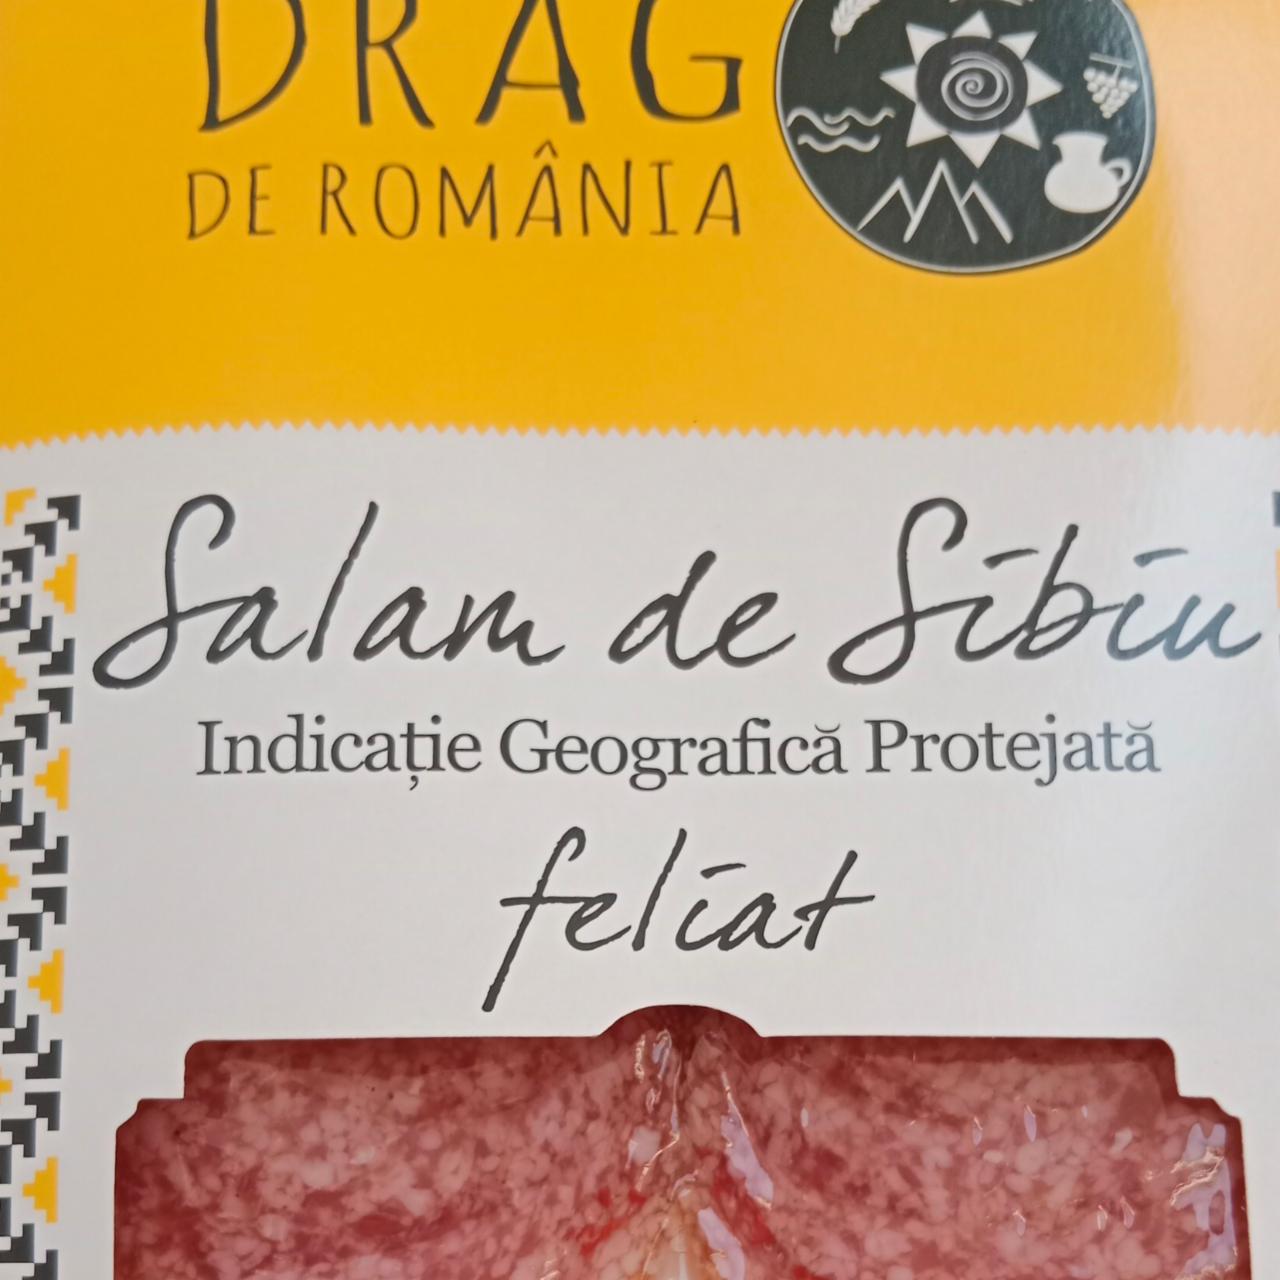 Fotografie - Salam de Síbíu felíat Drag de România